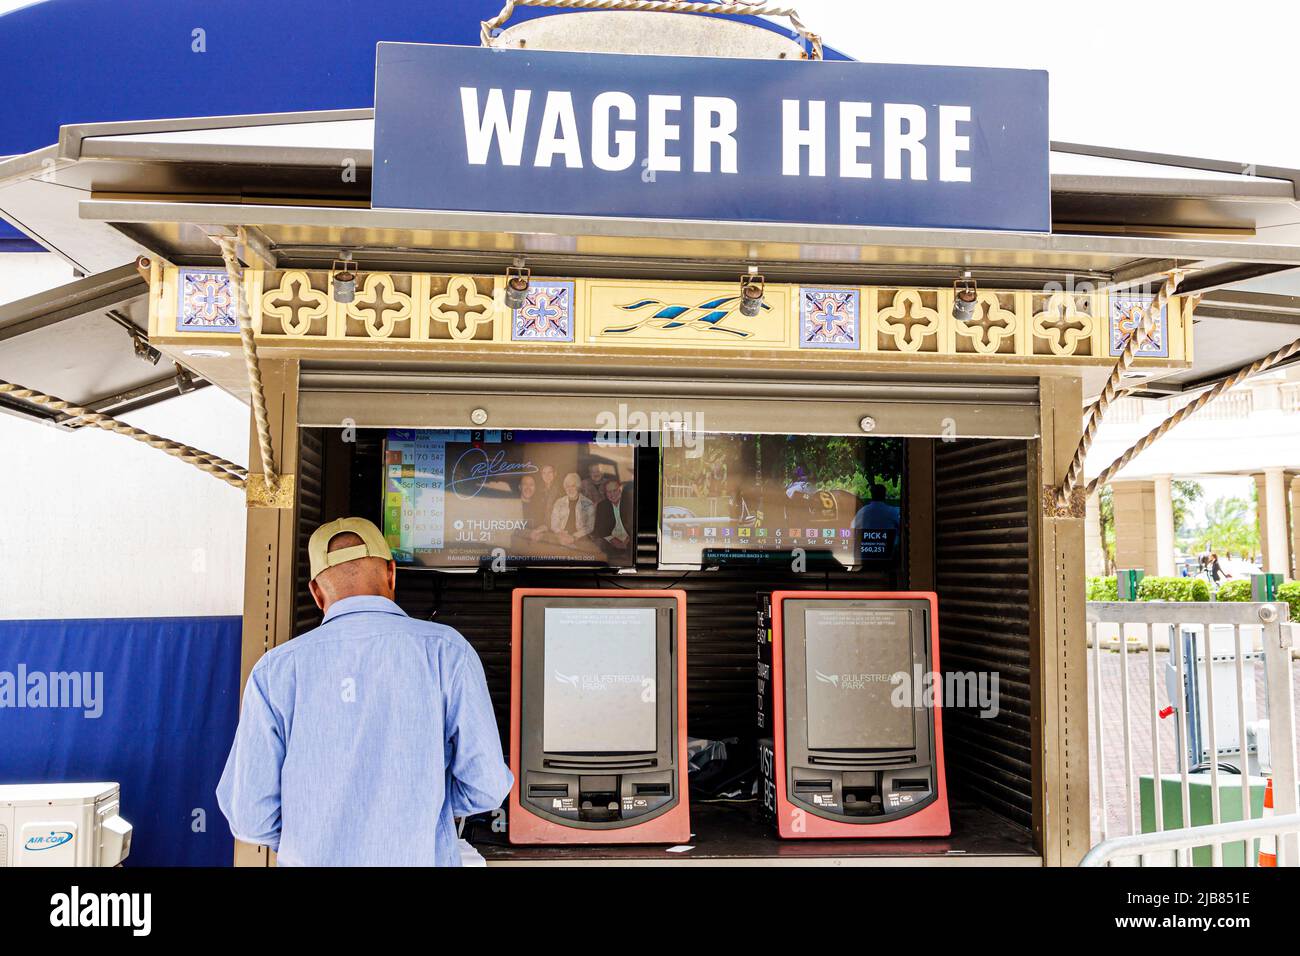 Hallandale Florida Miami,Gulfstream Park racetrack racecourse thoroughbred horse racing track,betting wager wagering window gambling gambler gamblers Stock Photo